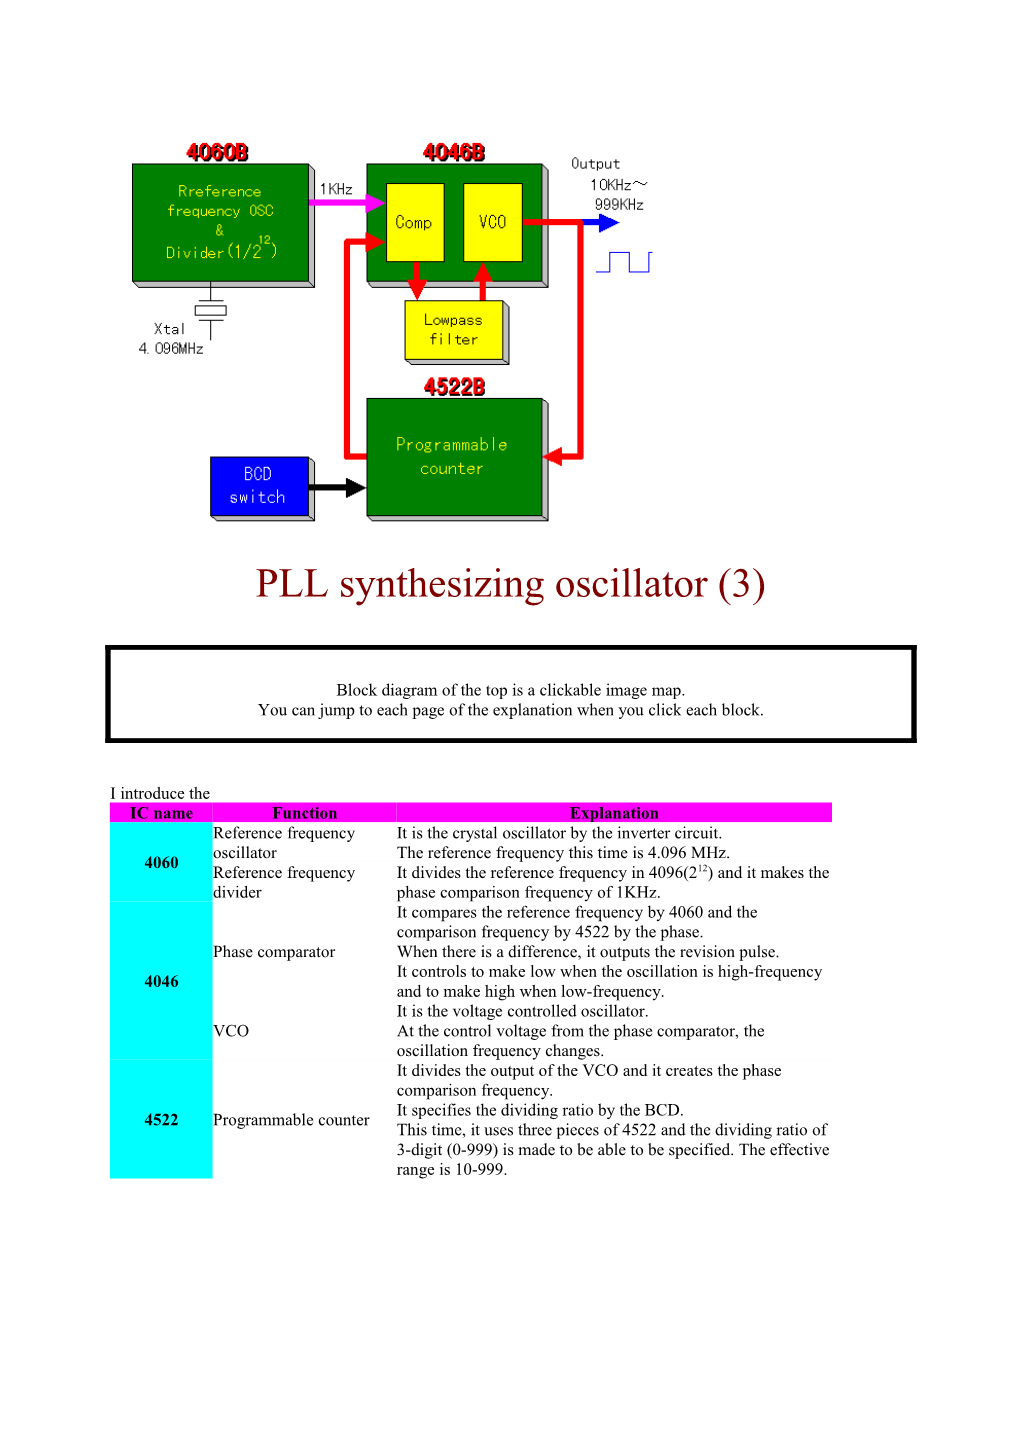 PLL Synthesizing Oscillator (3)